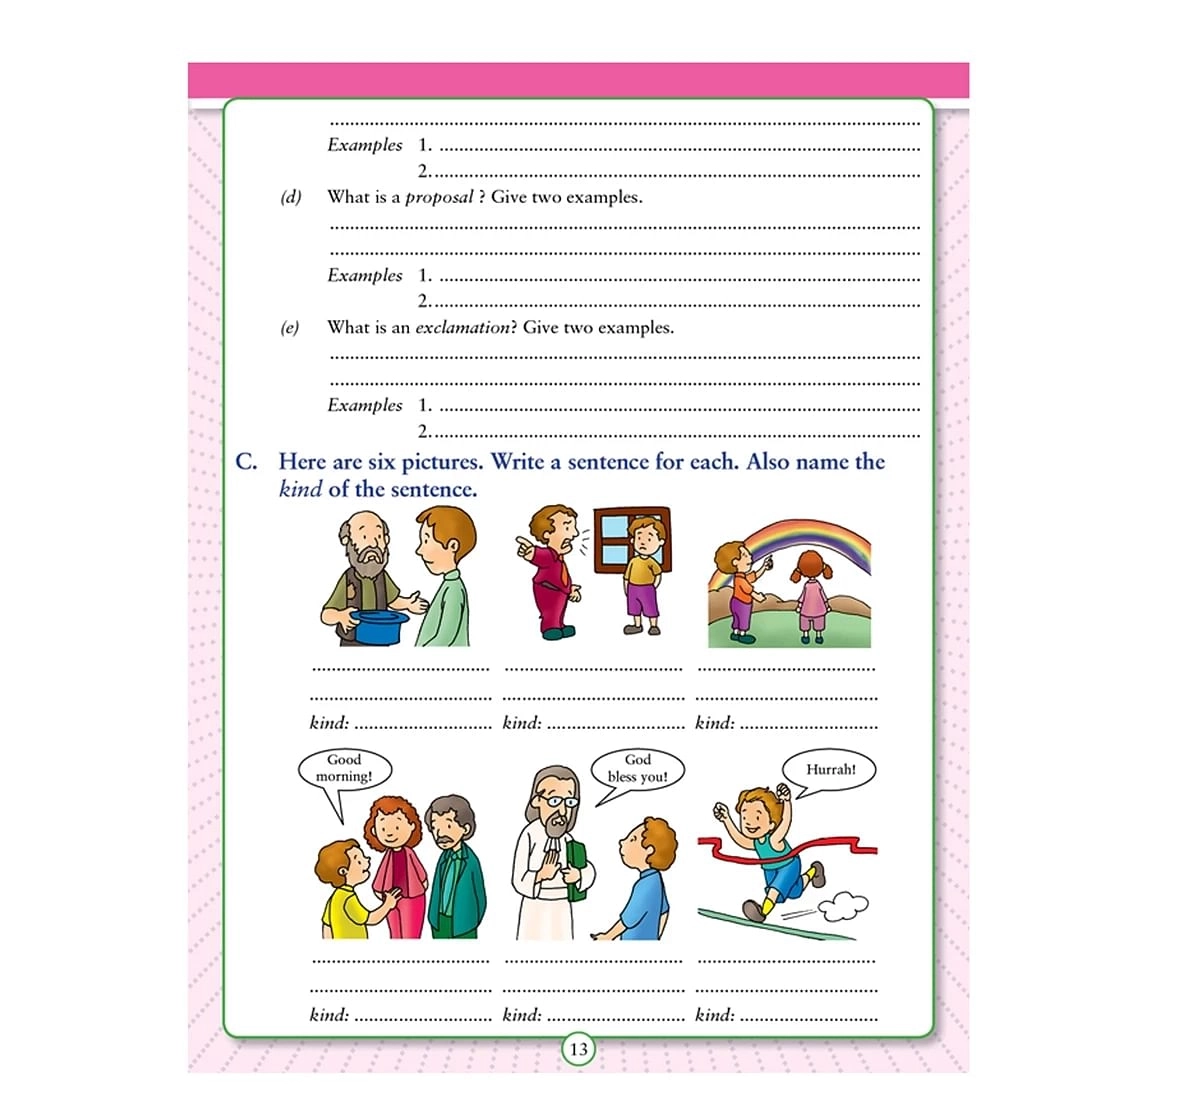 Dreamland Paper Back Graded English Grammar Part 5 School Textbooks for kids 5Y+, Multicolour